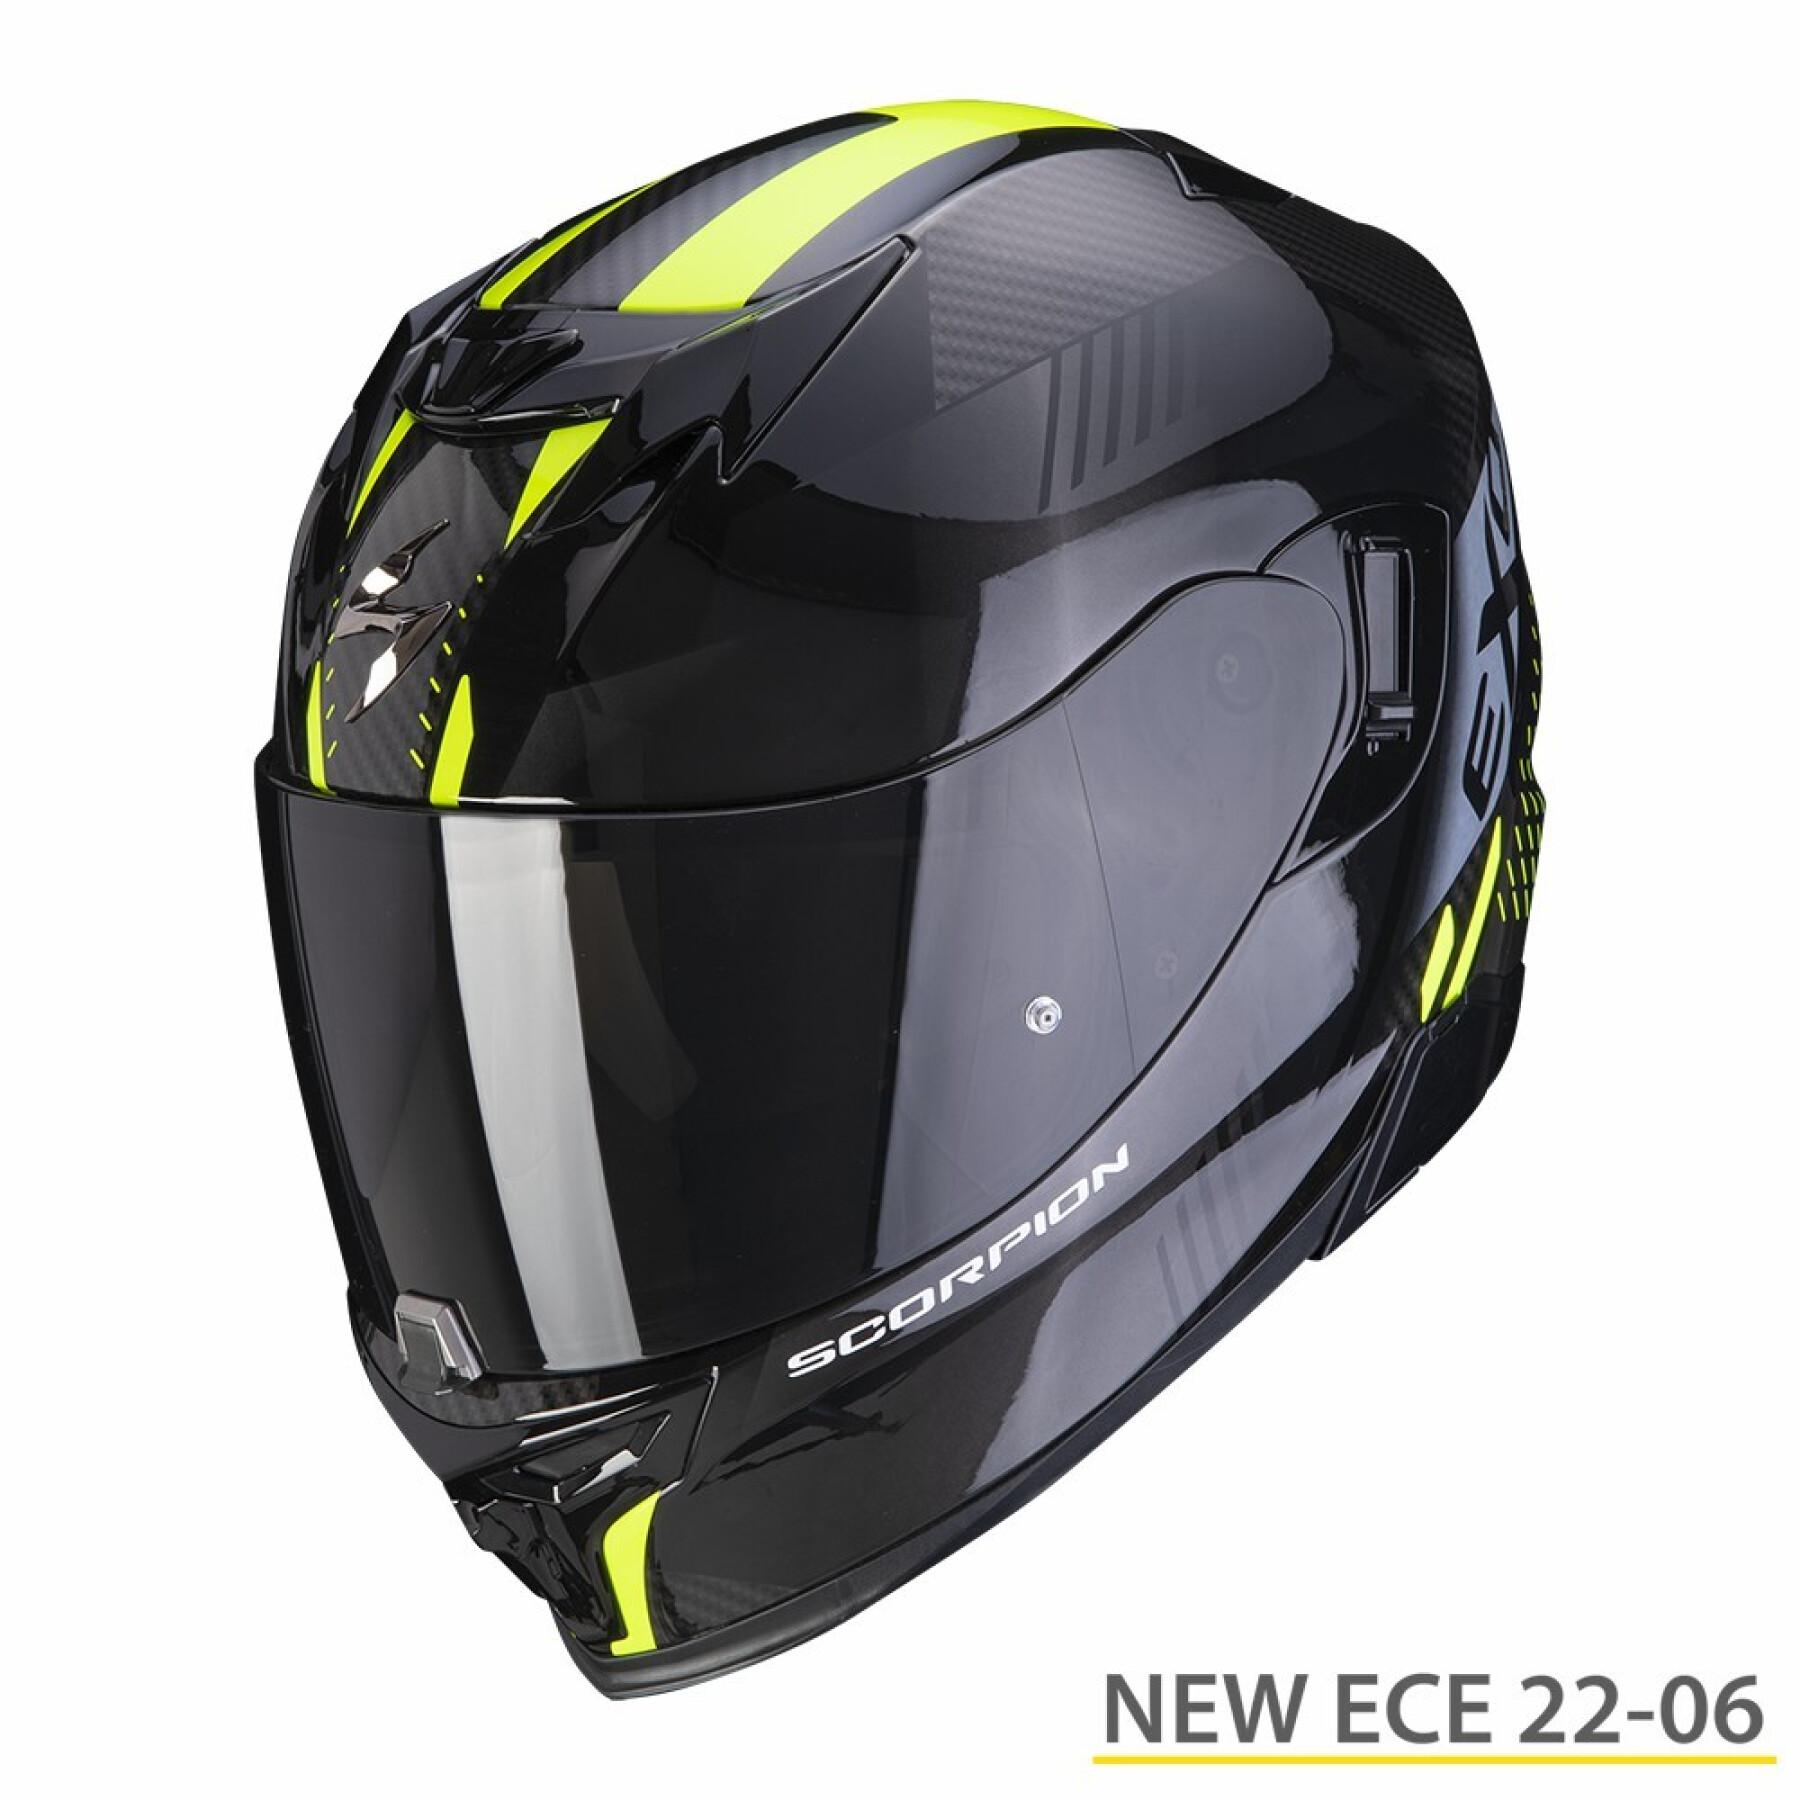 Full face motorcycle helmet Scorpion Exo-520 Evo Air Laten ECE 22-06